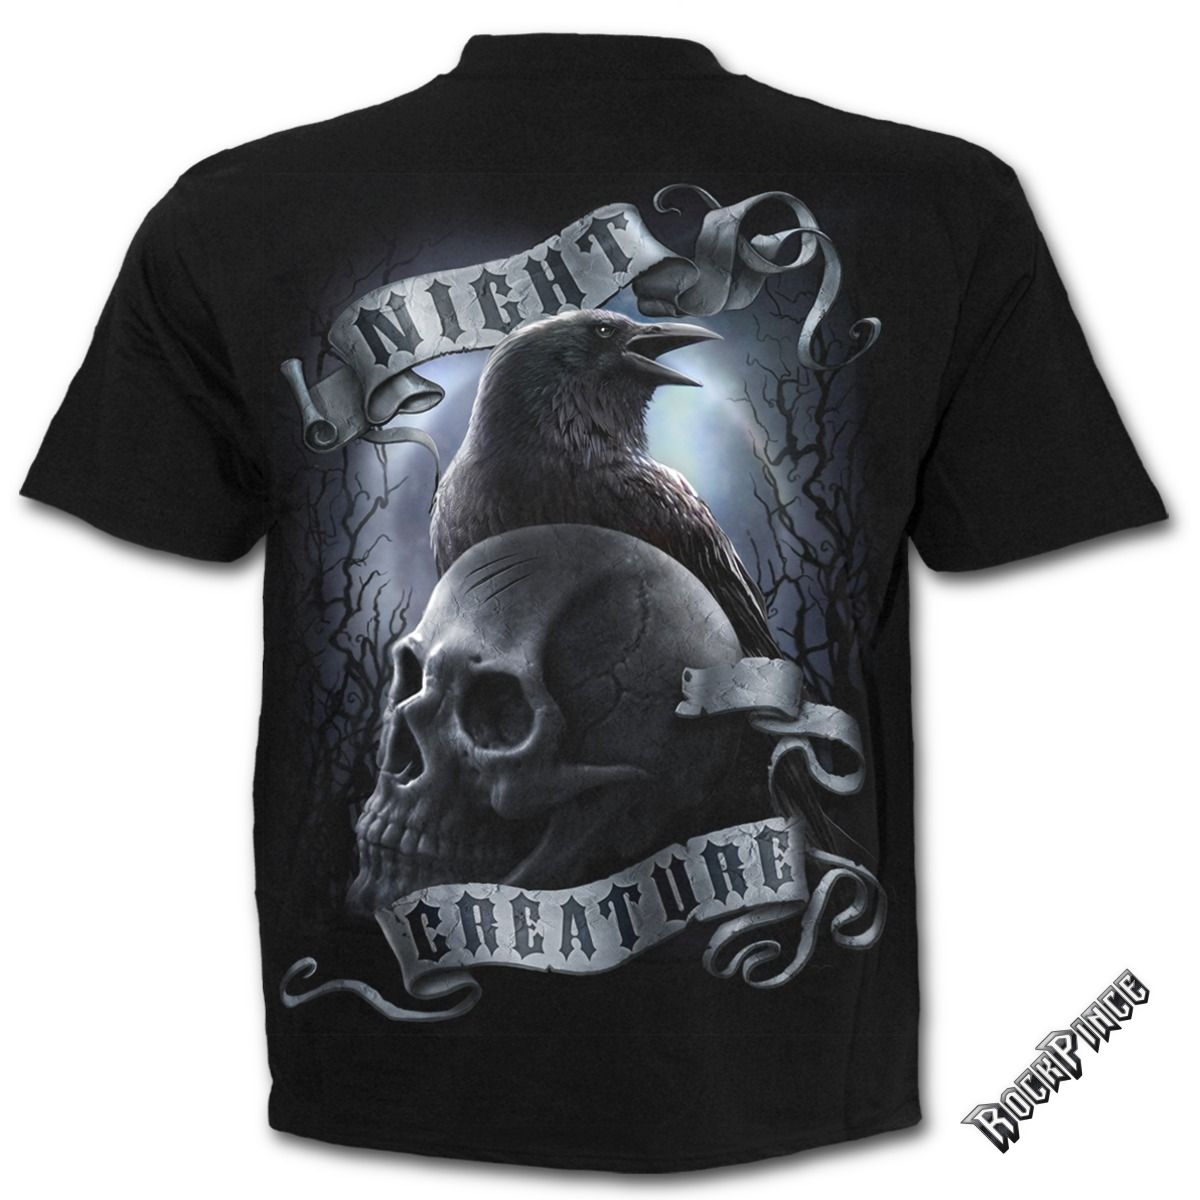 NIGHT CREATURE - T-Shirt Black - T116M101